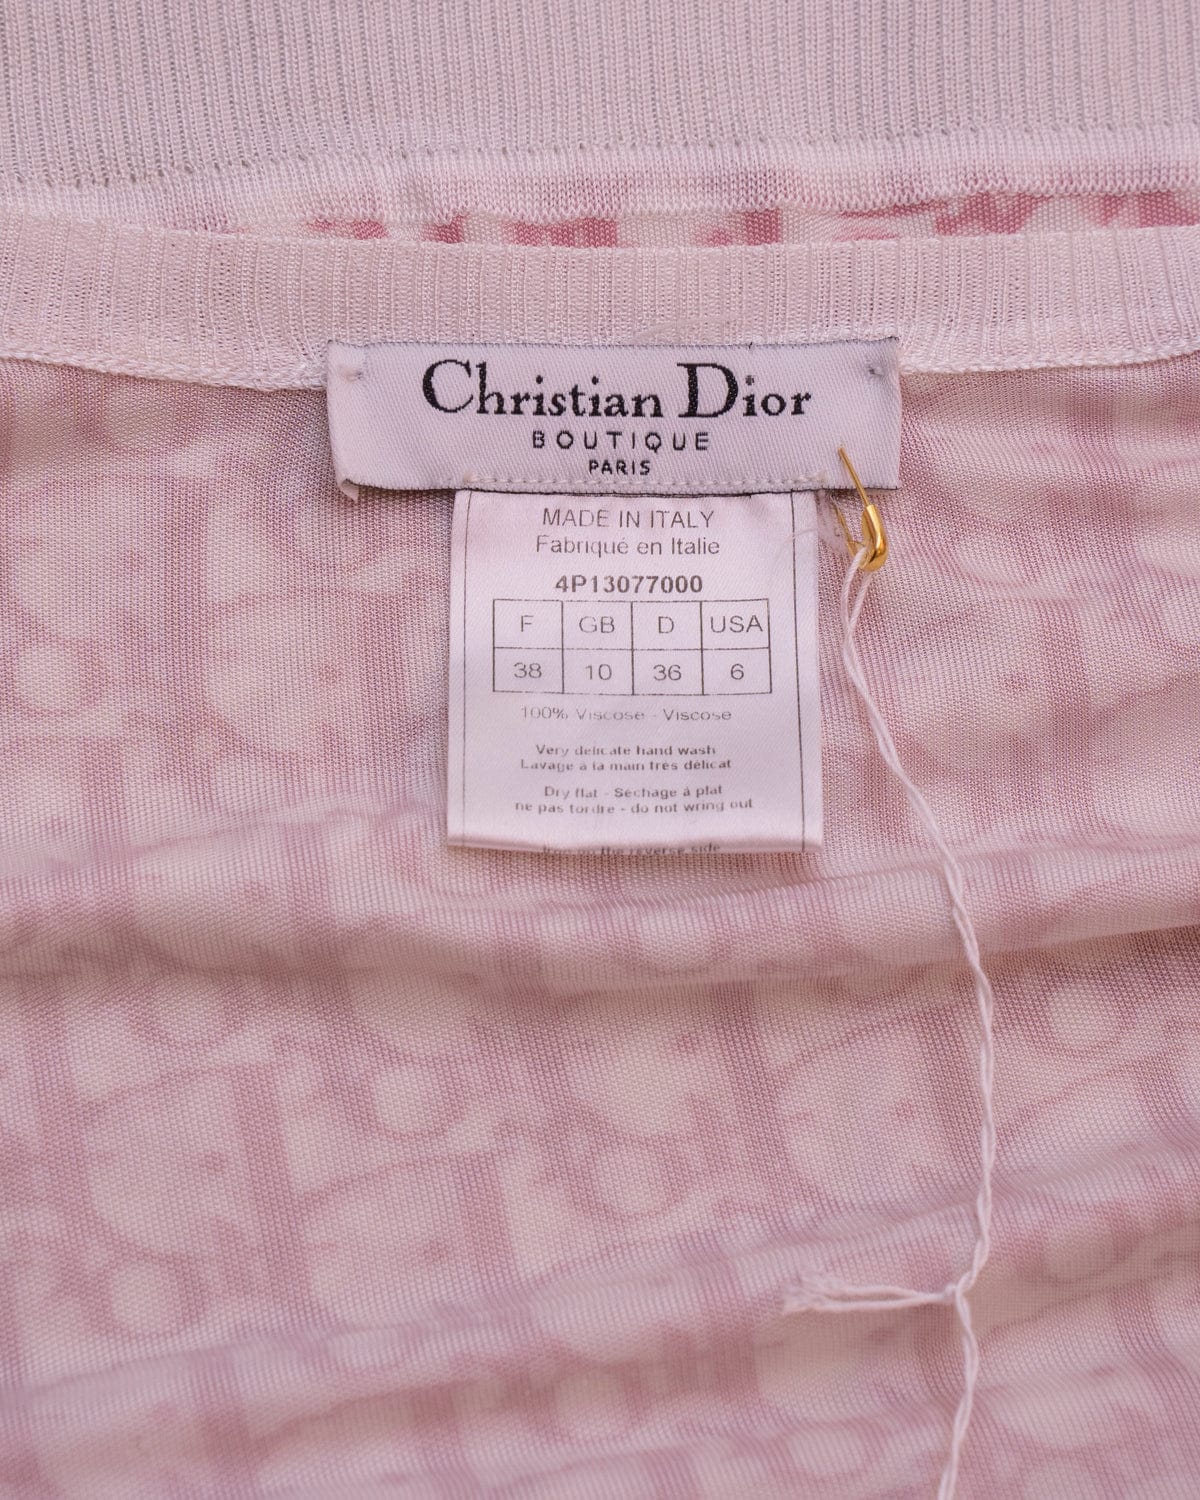 Chanel Christian Dior Boutique Pink Oblique Zip Top - ASL2019